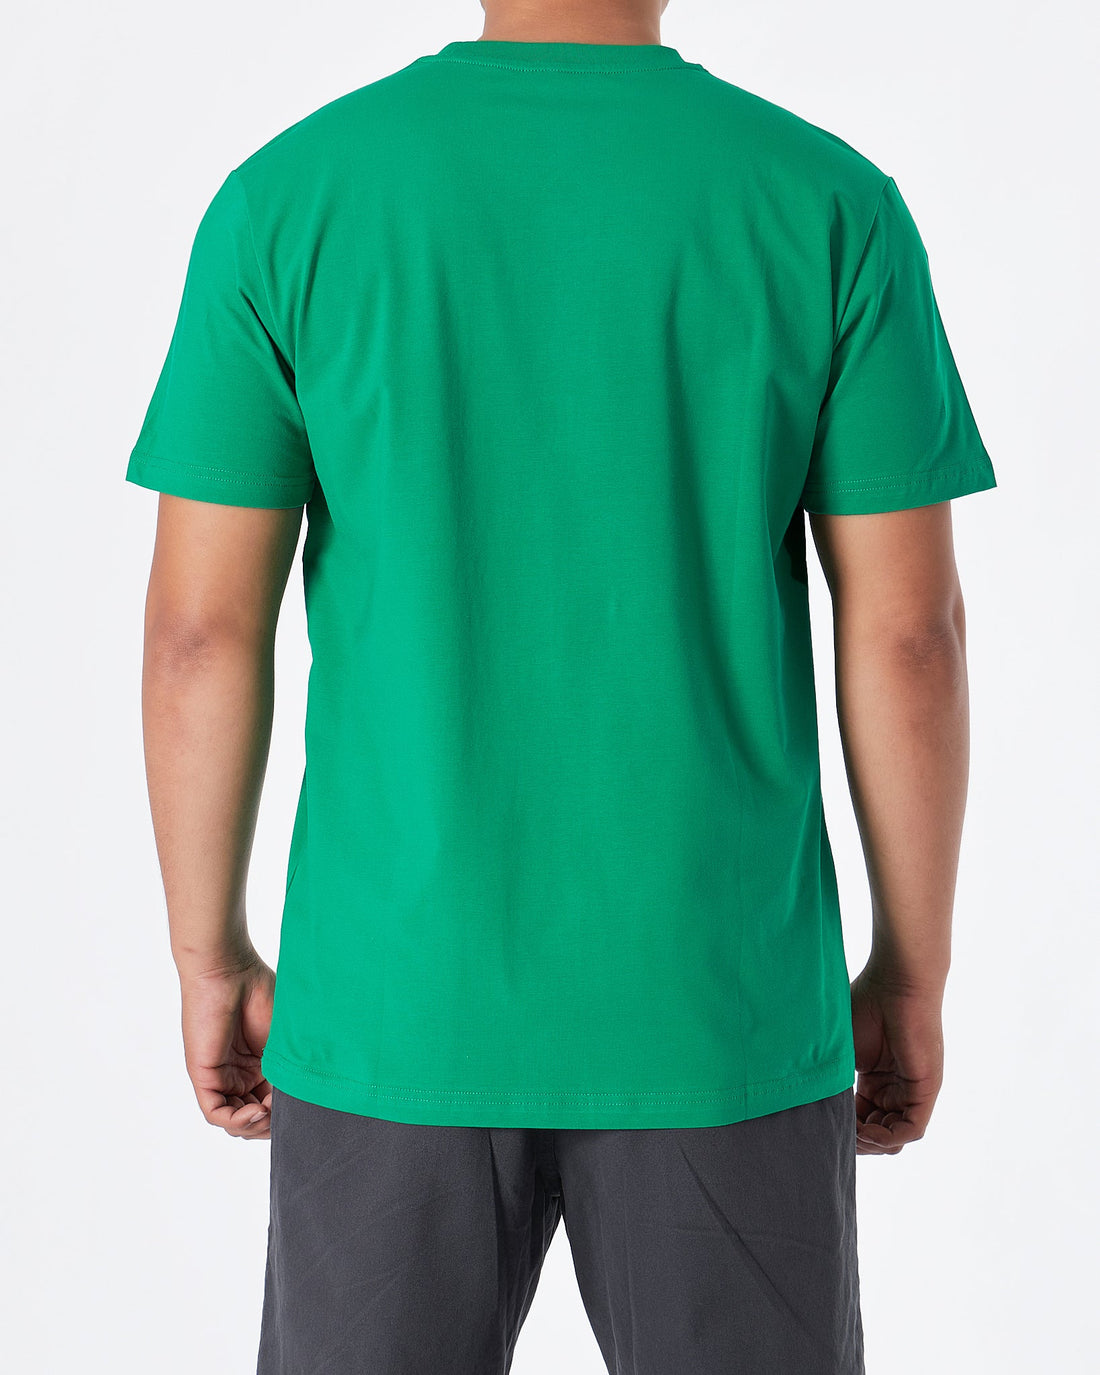 MOI OUTFIT-LAC Plain Men Green T-Shirt 15.90